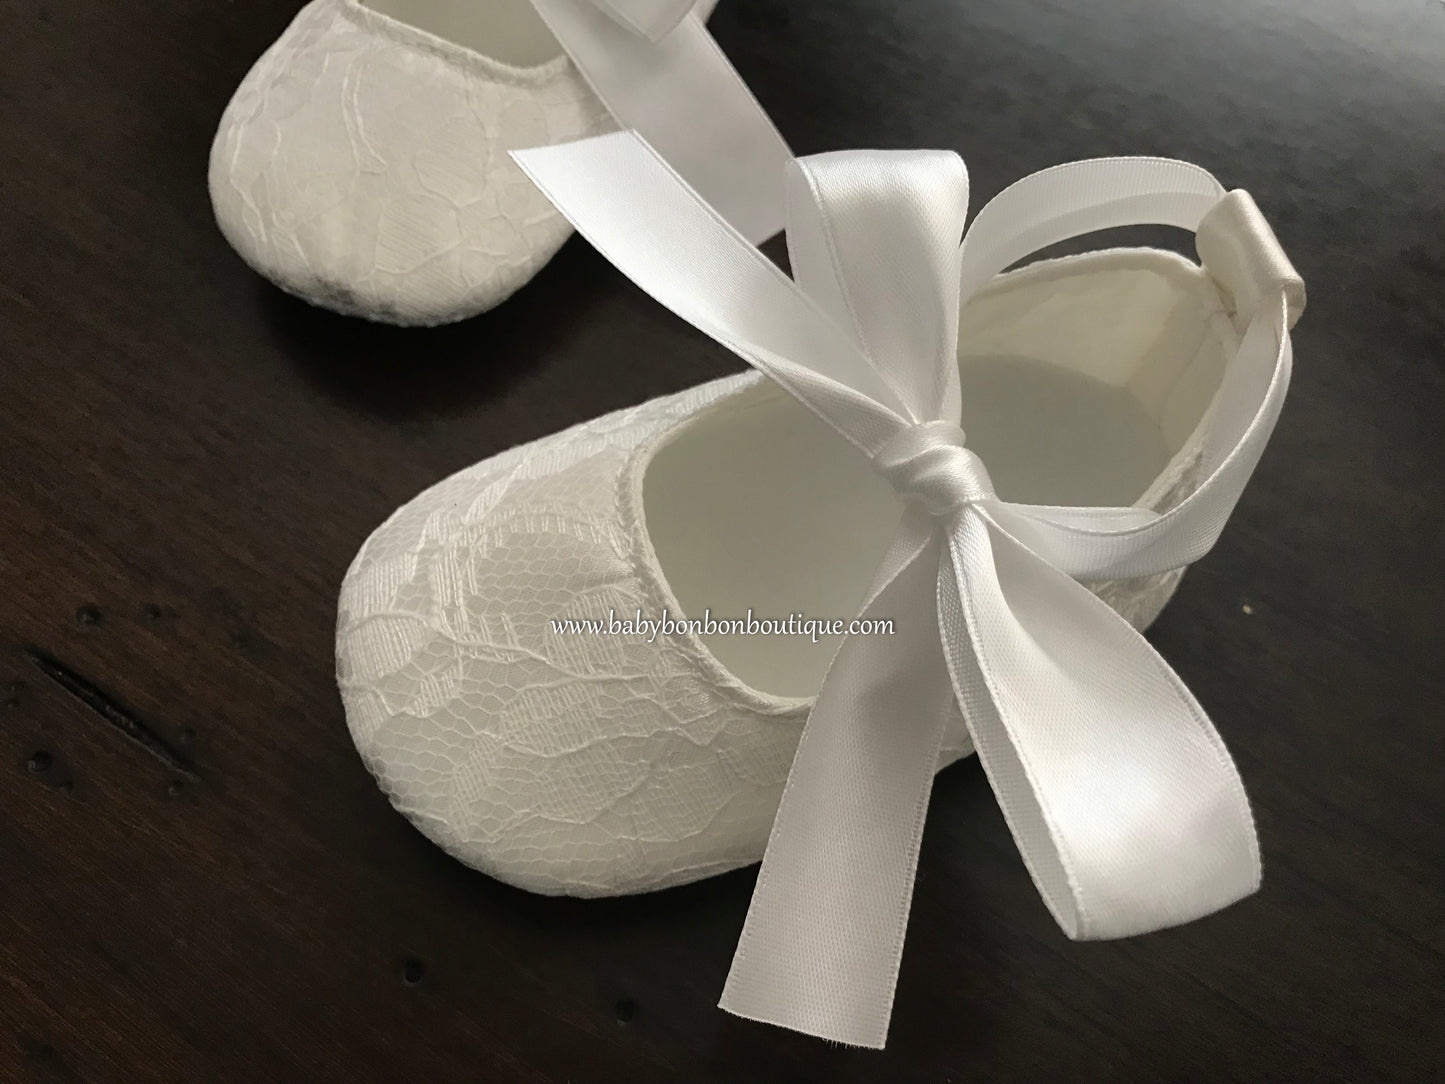 Ivory Baby Baptism Shoes, Baby White Lace Baptism shoes